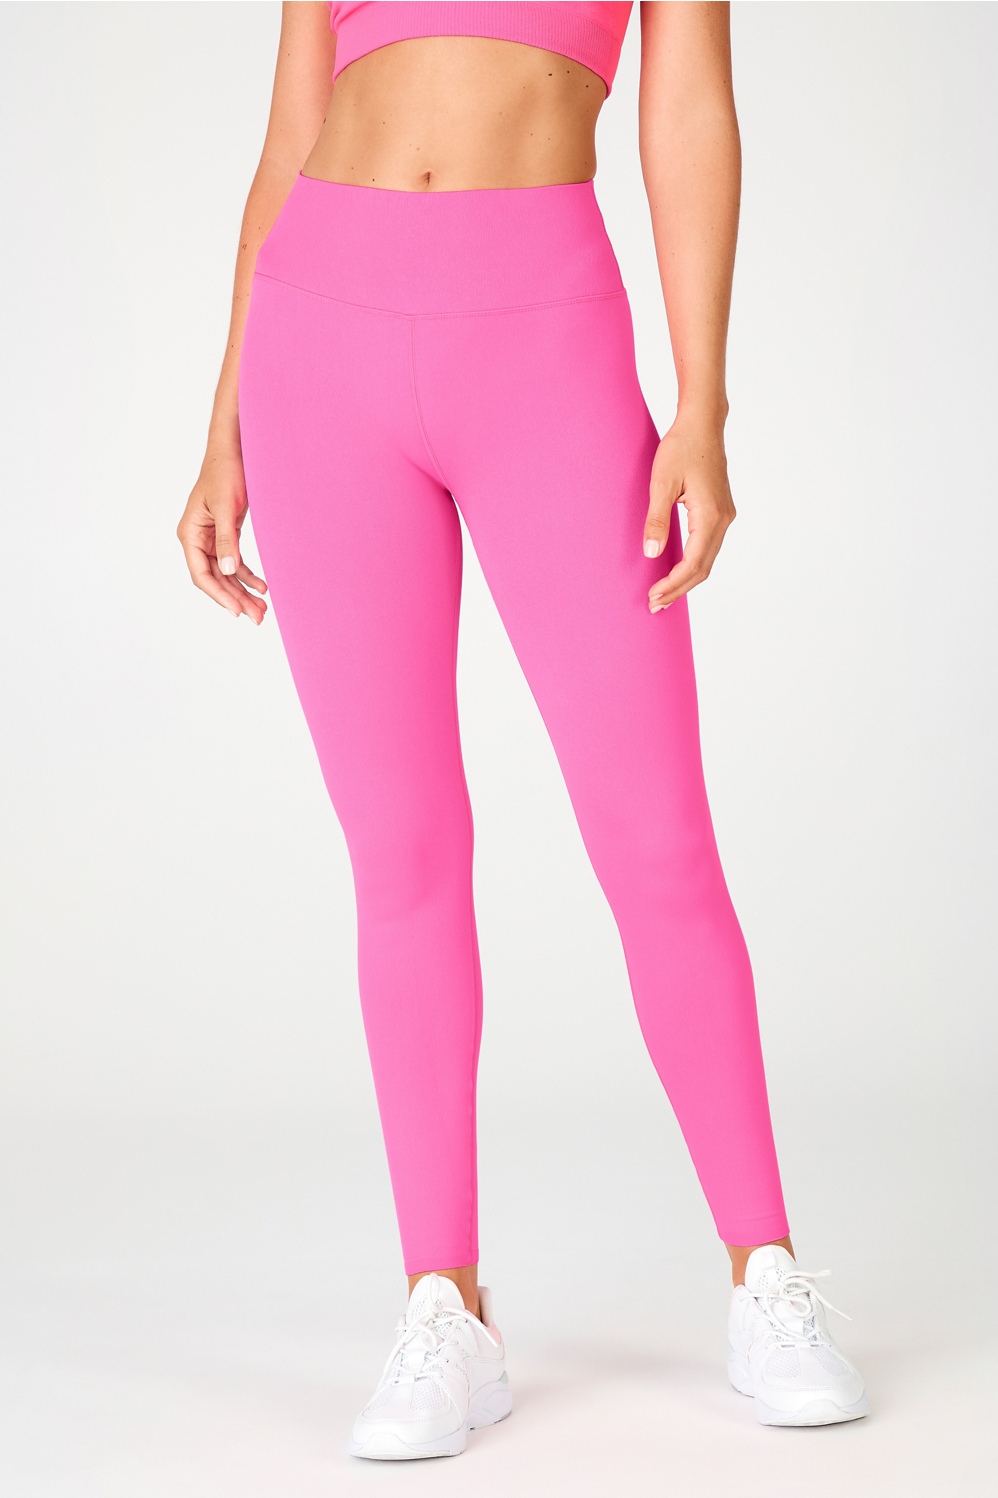 Victoria's Secret Pink Cotton High Waisted Leggings - ShopStyle